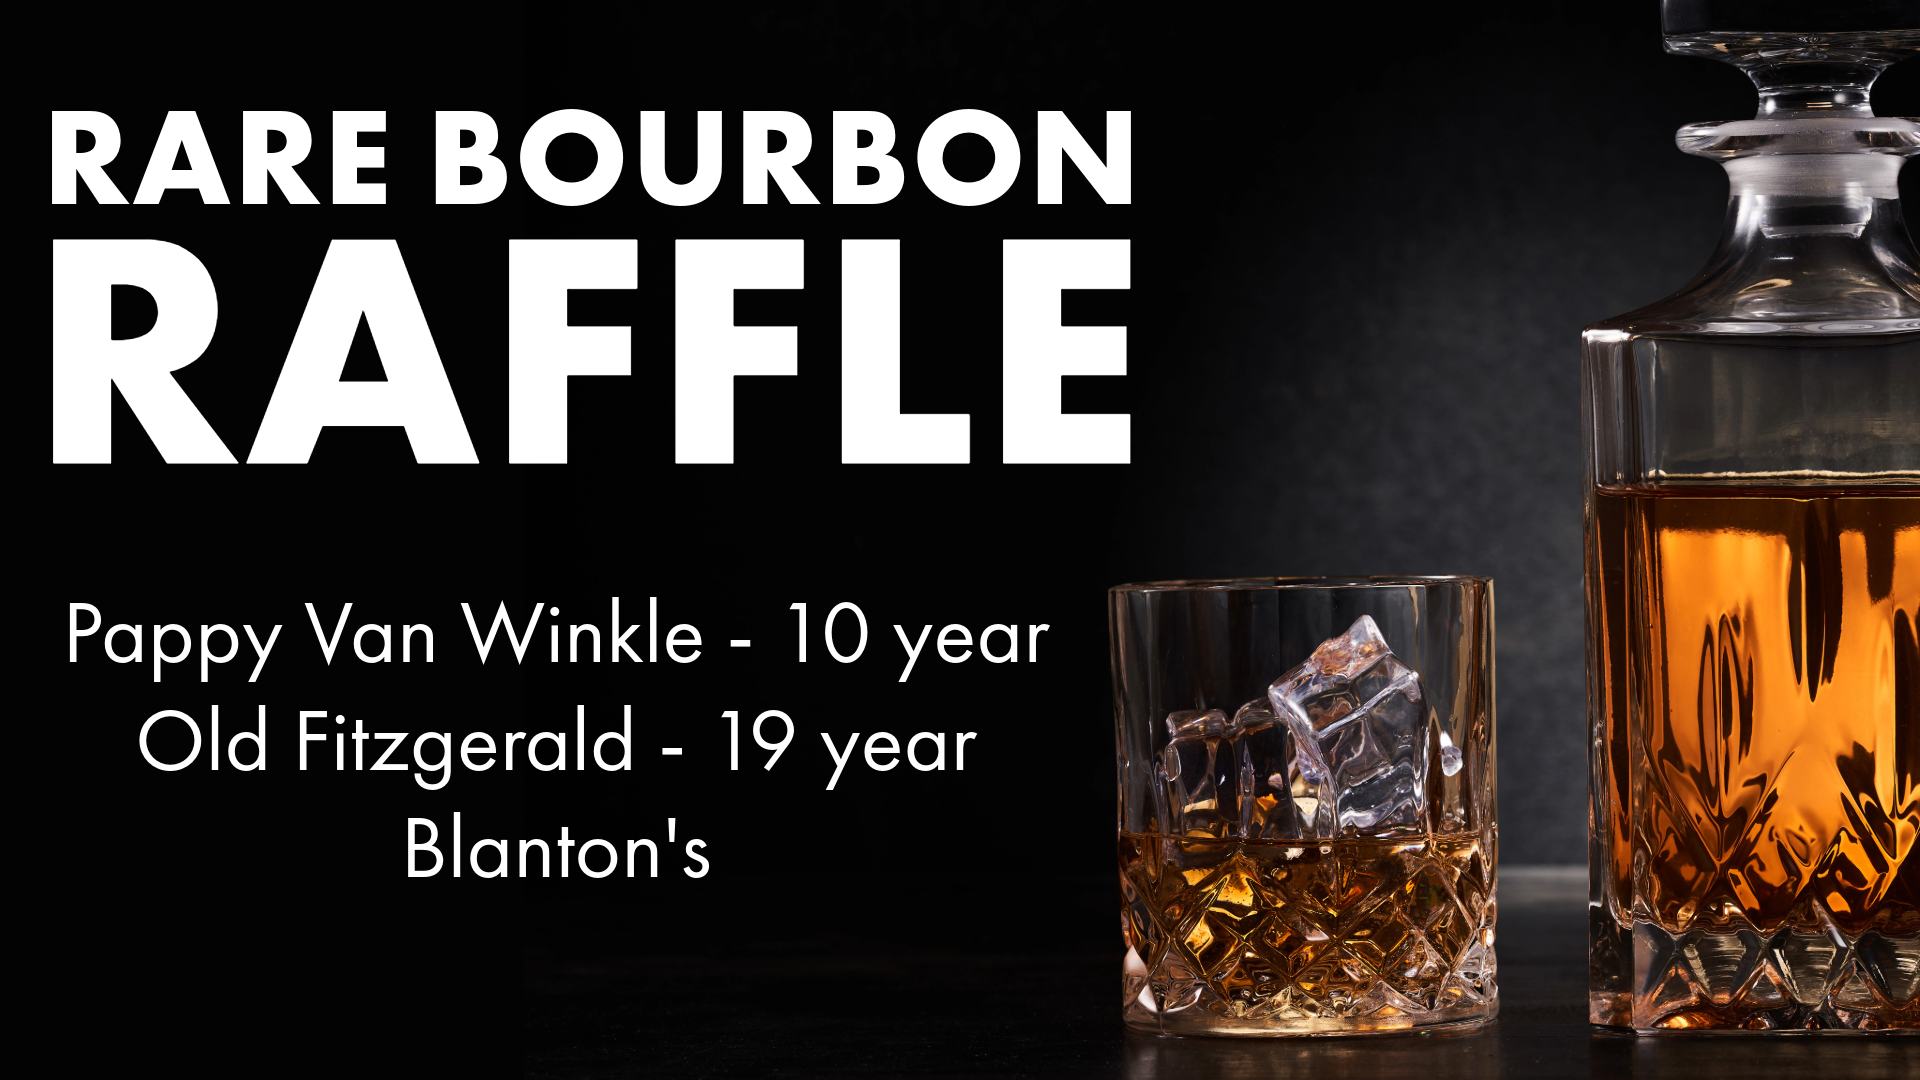 bourbon raffle website